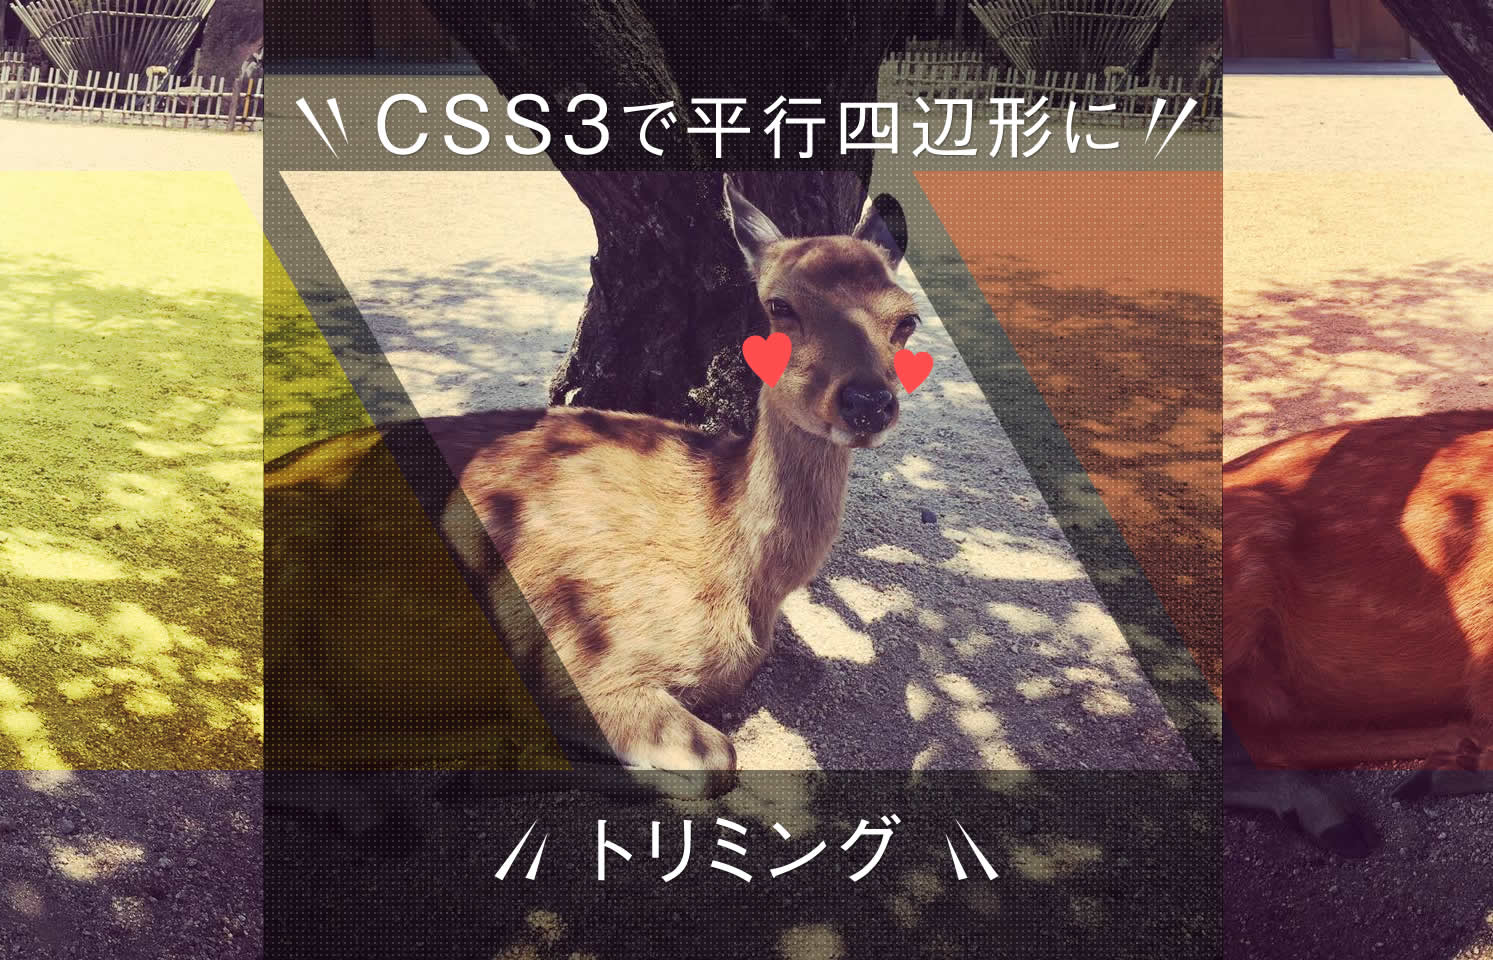 Css3のtransformで要素を斜めにしたり平行四辺形に画像をトリミング 大阪 東京のweb制作会社 株式会社クリエイティブ ウェブ